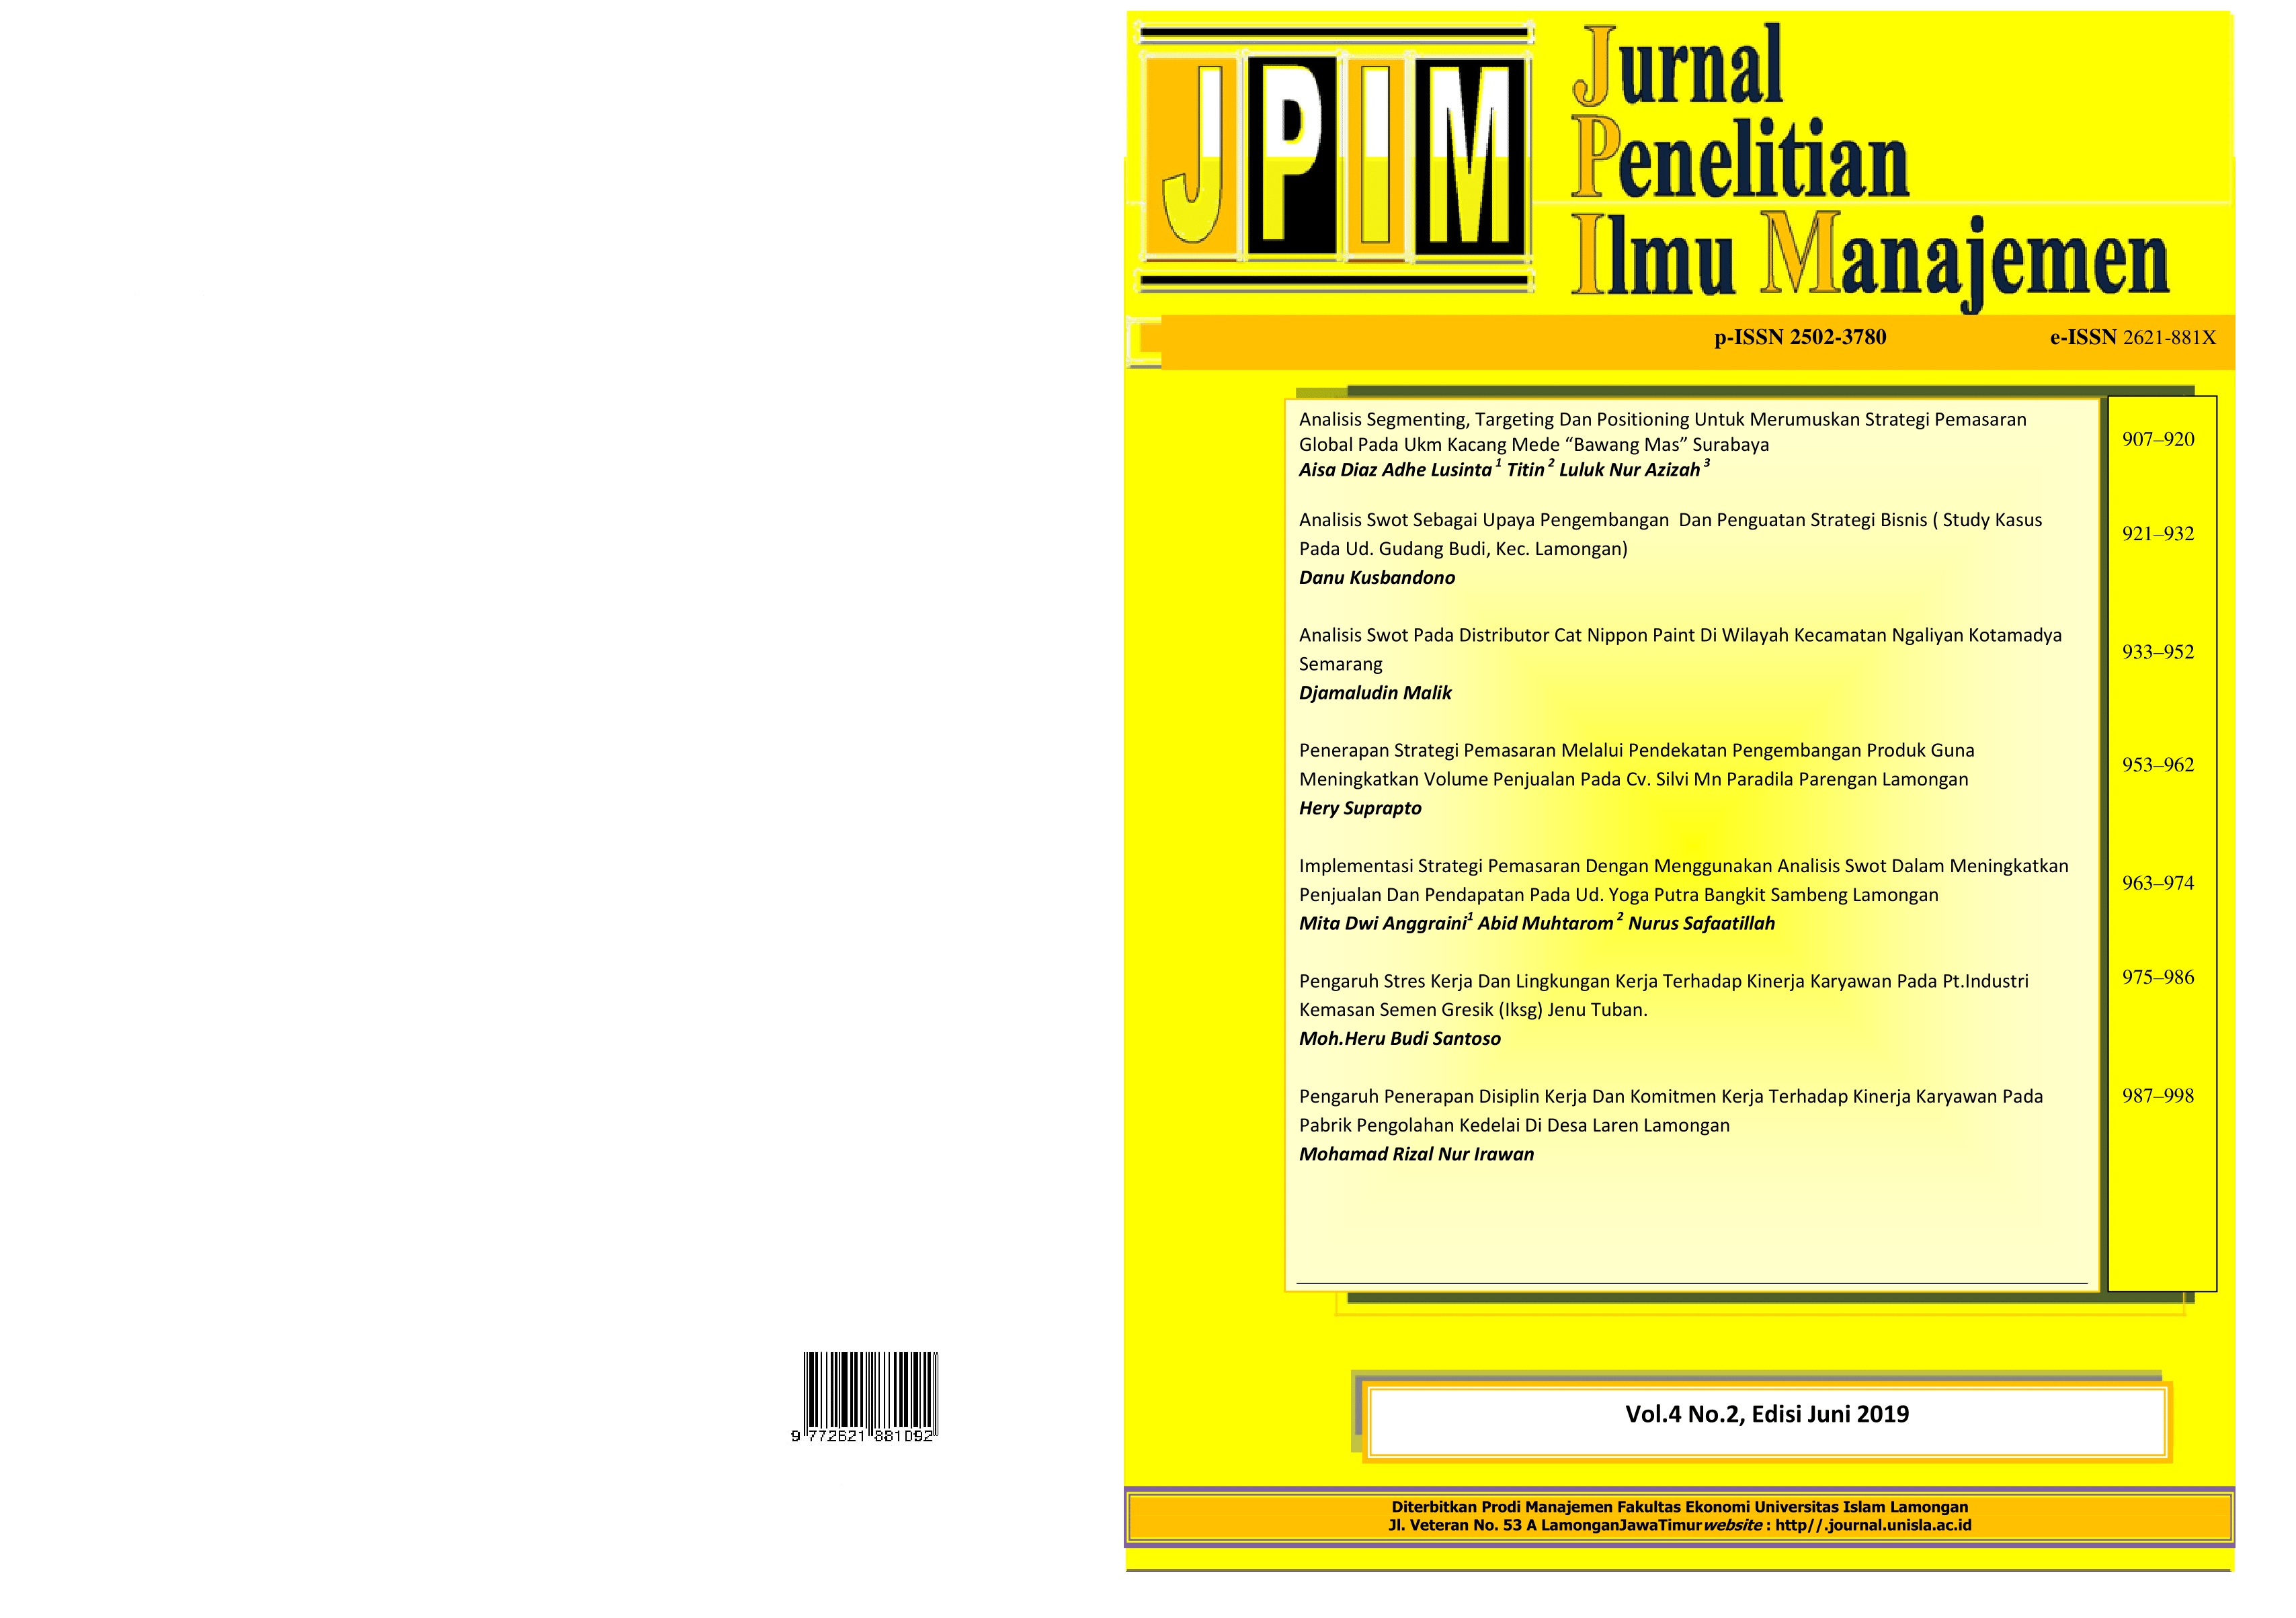 					View Vol. 4 No. 2 (2019): JPIM (JURNAL PENELITIAN ILMU MANAJEMEN)
				